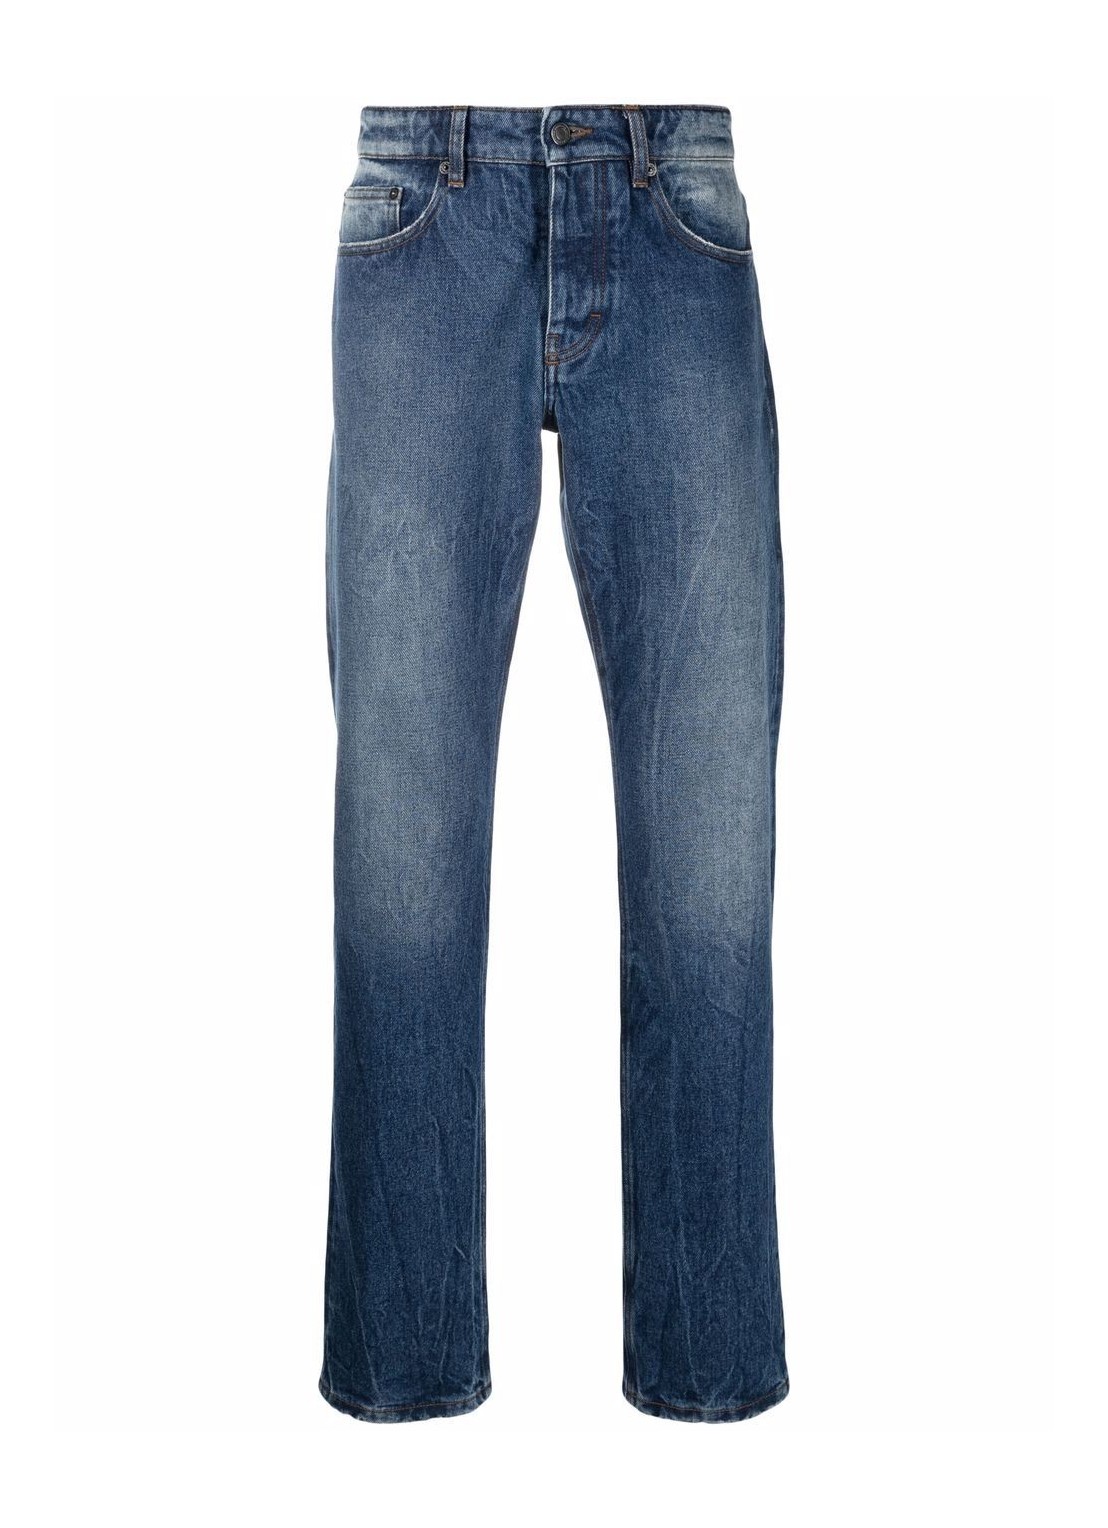 Pantalon jeans ami denim man classic fit jeans htr001601 480 talla 34
 